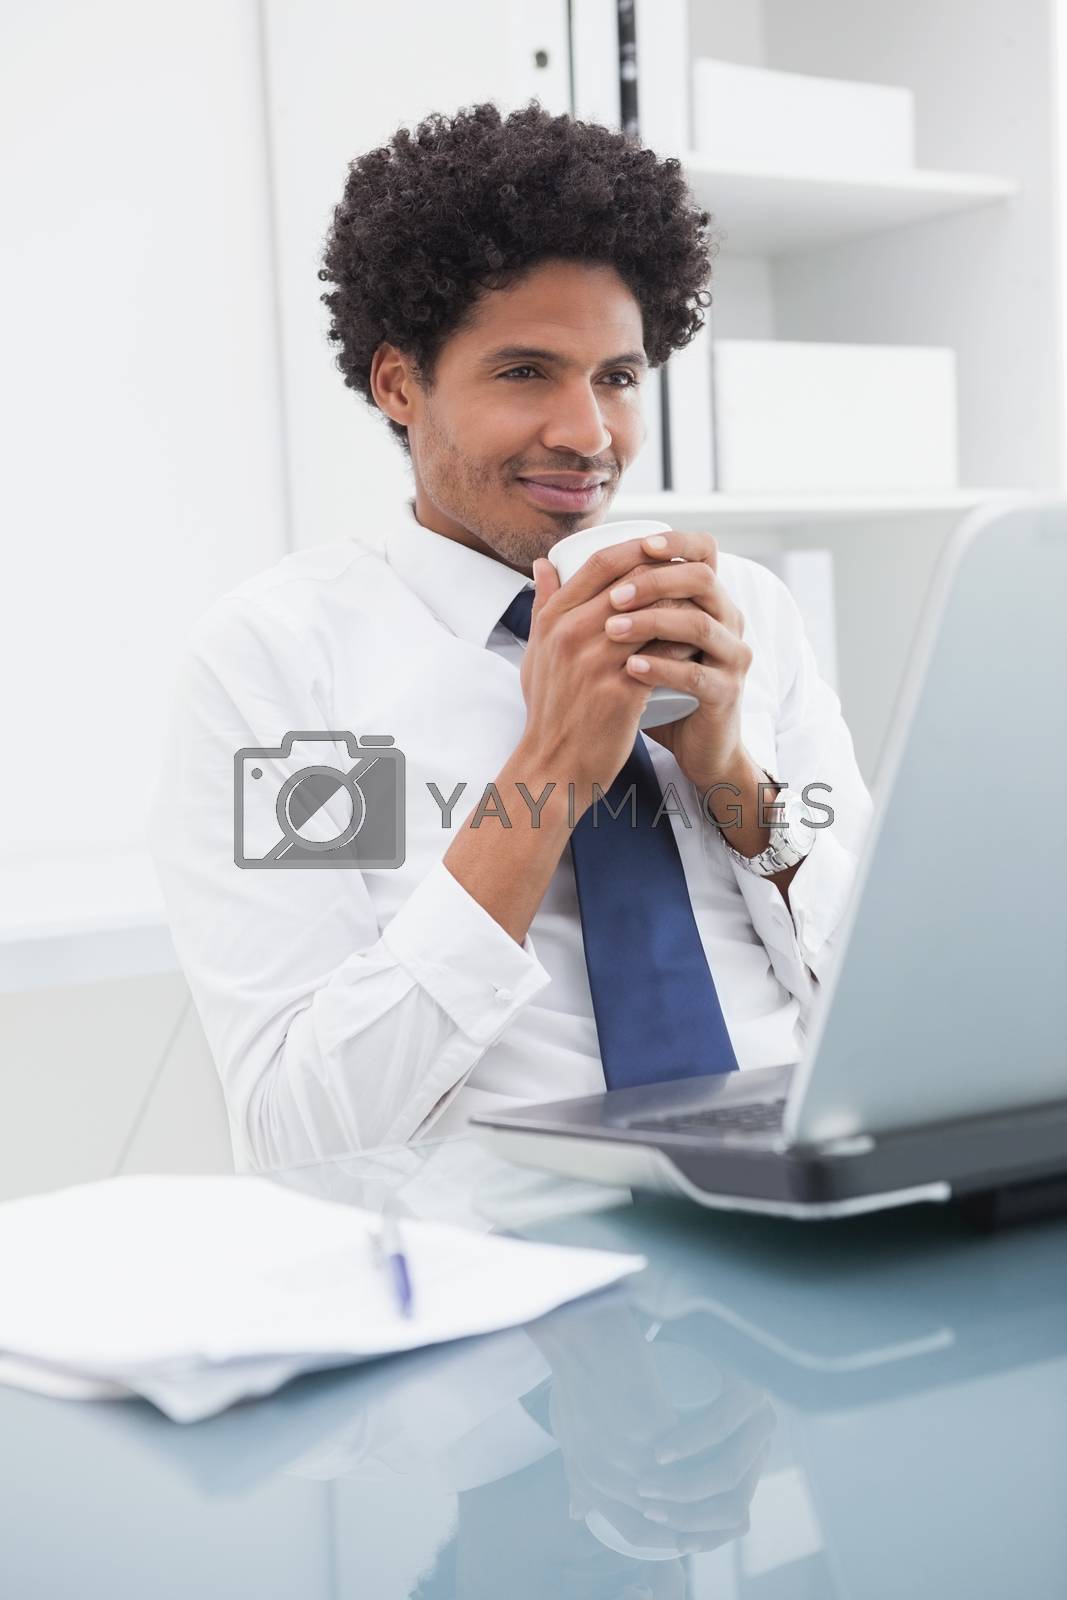 Royalty free image of Cheerful businessman enjoying hot drink by Wavebreakmedia